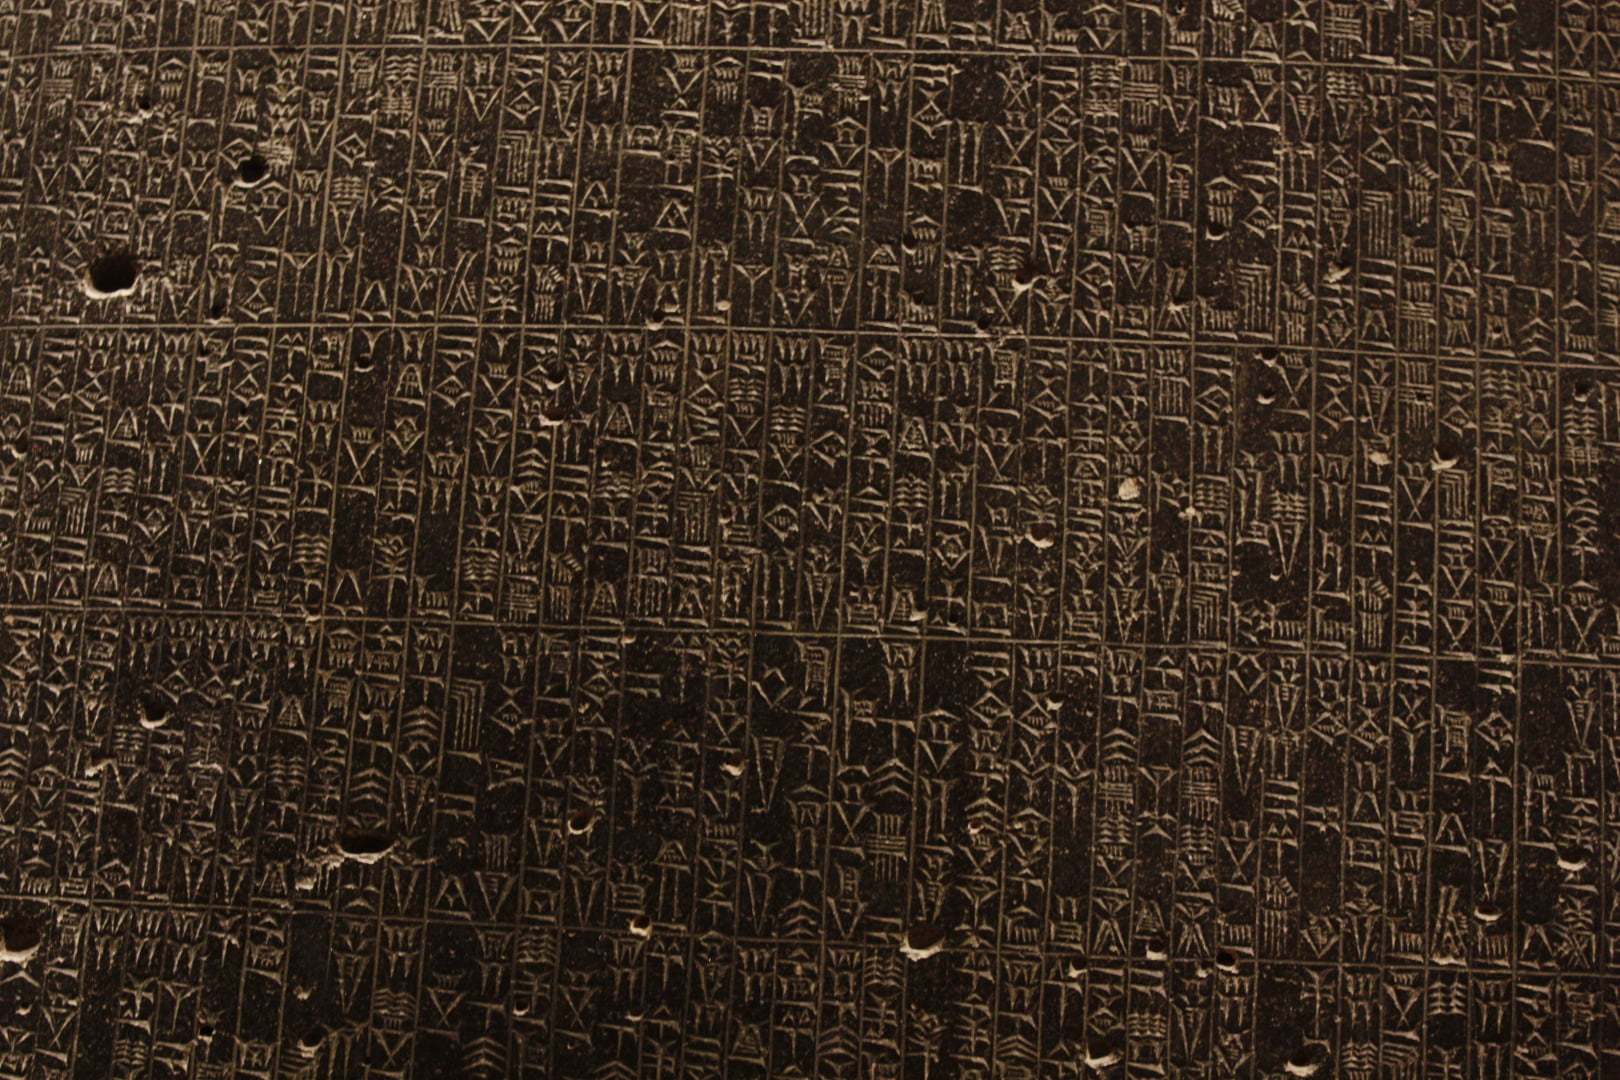 Codex Hammurabi, Louvre, Paris